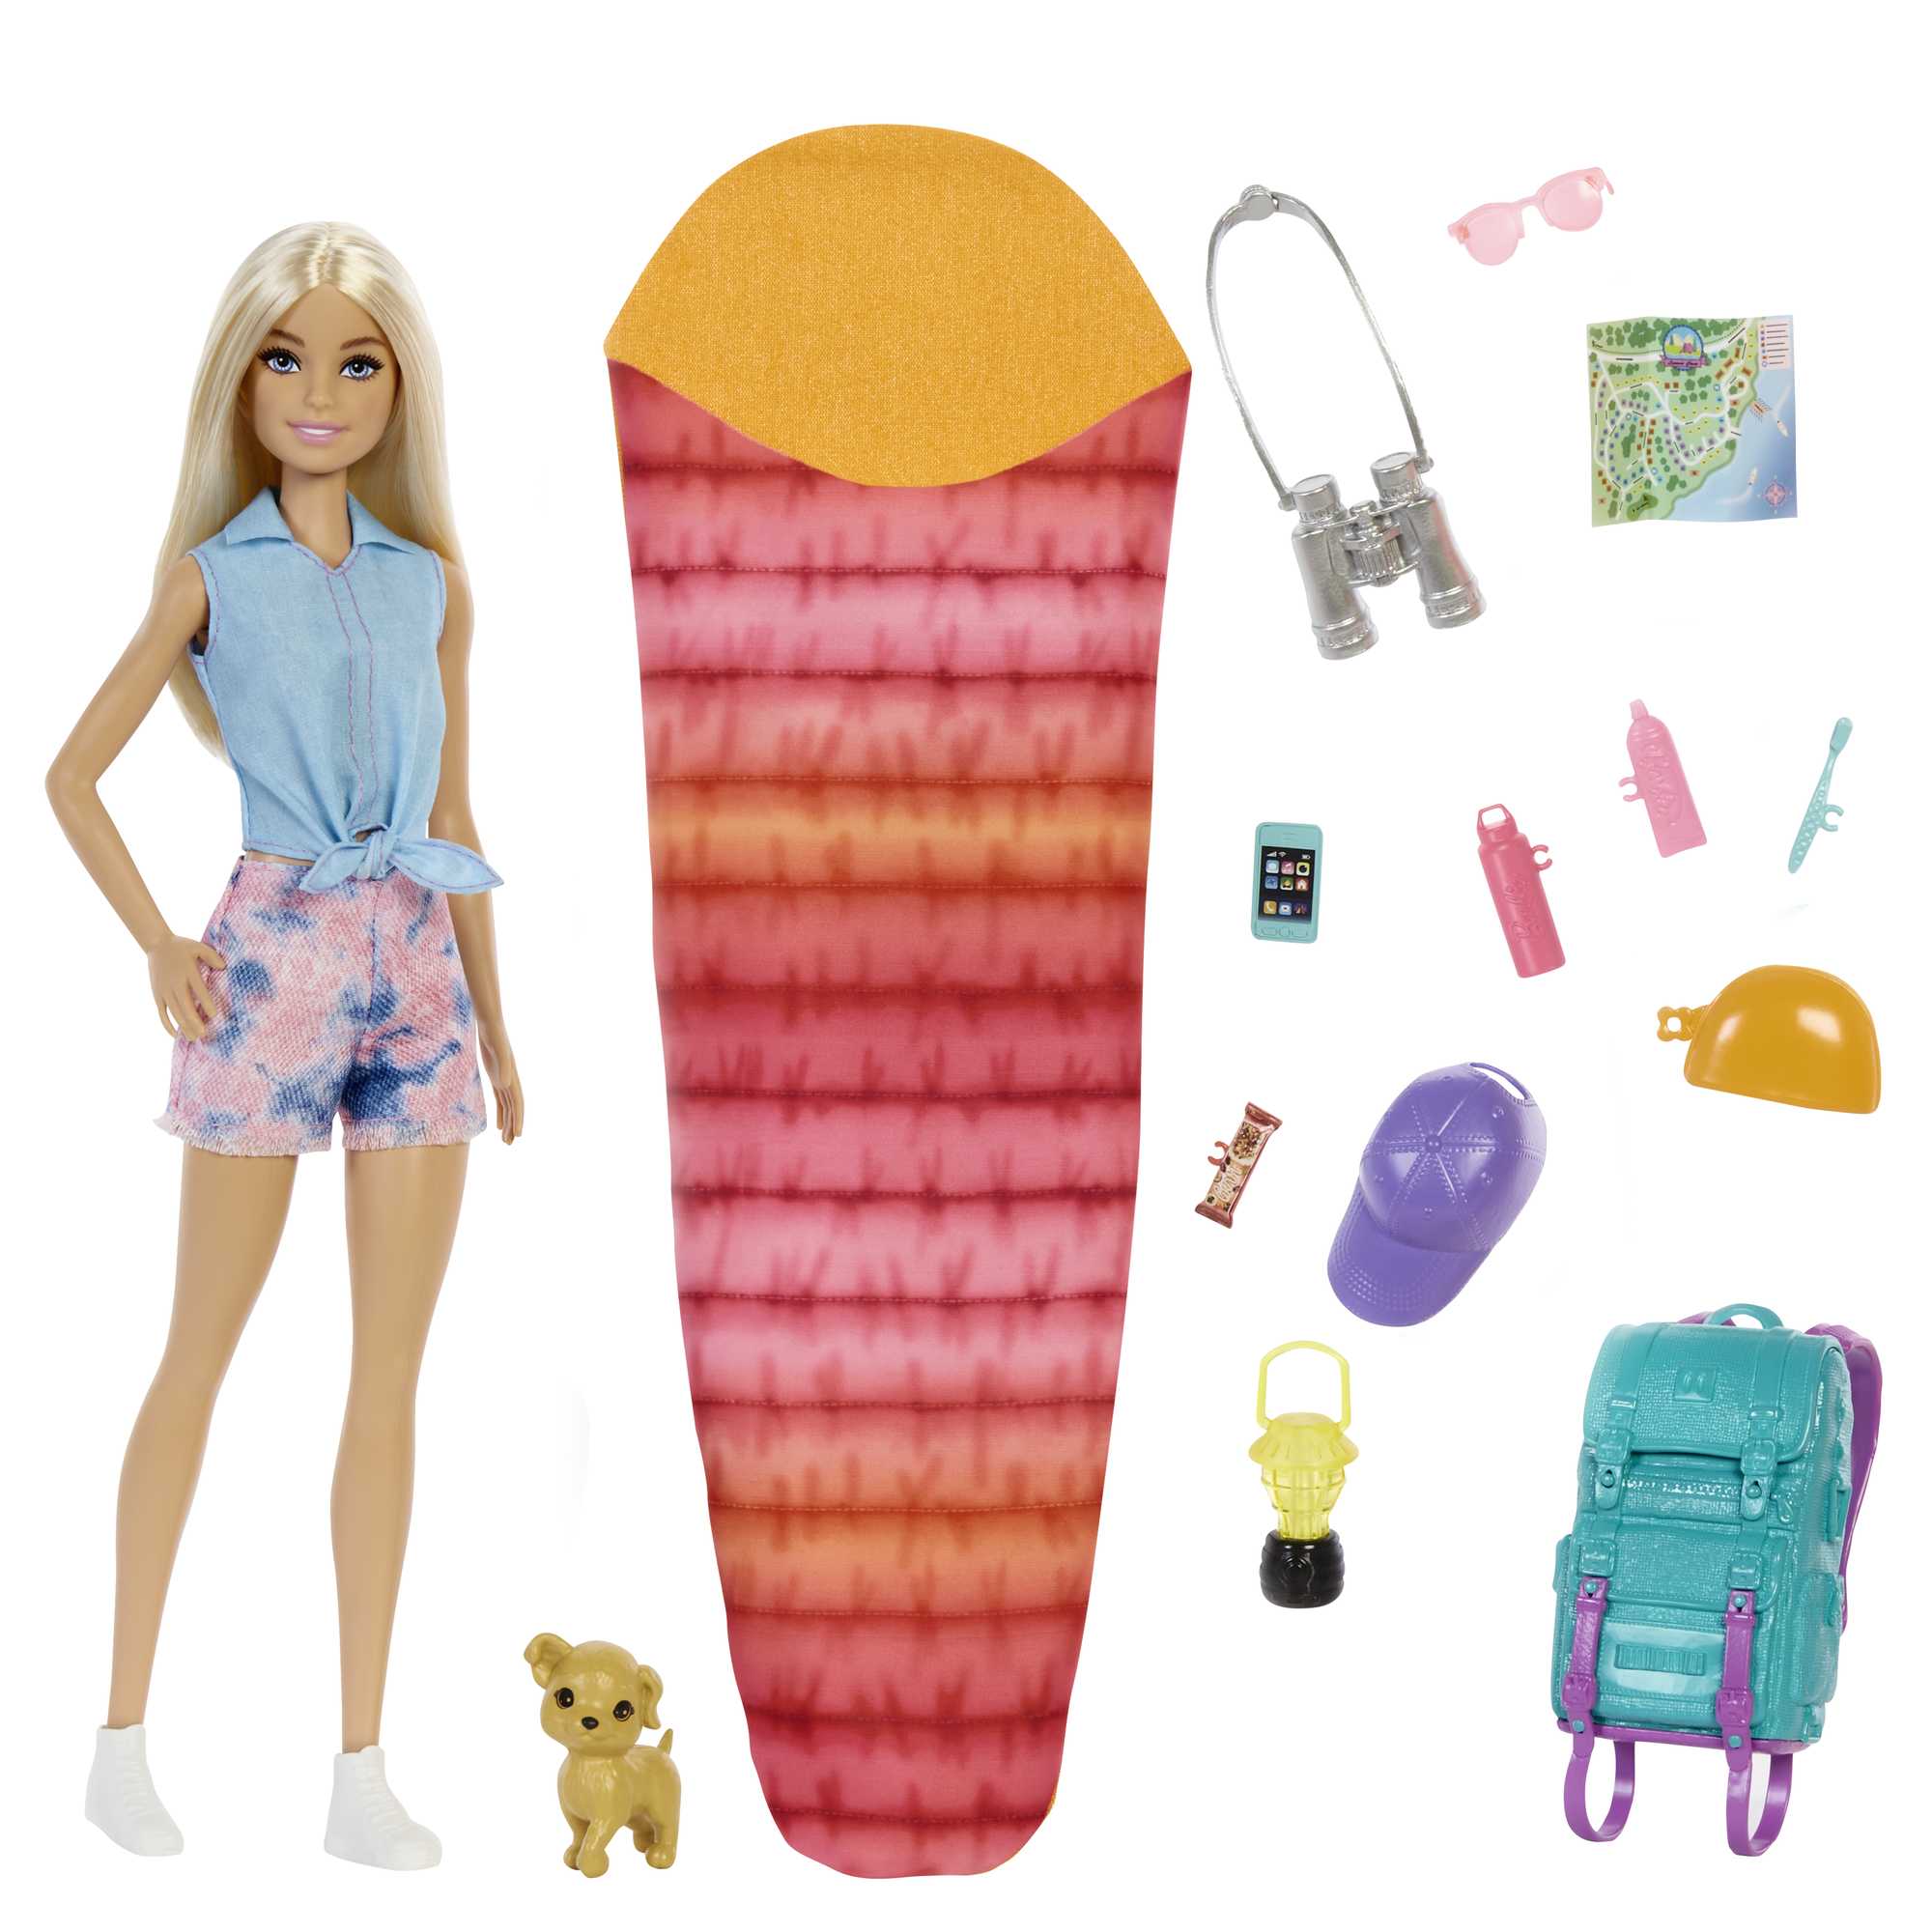 Barbie Casa Glam C/ Boneca - HCD48 - Mattel - Real Brinquedos